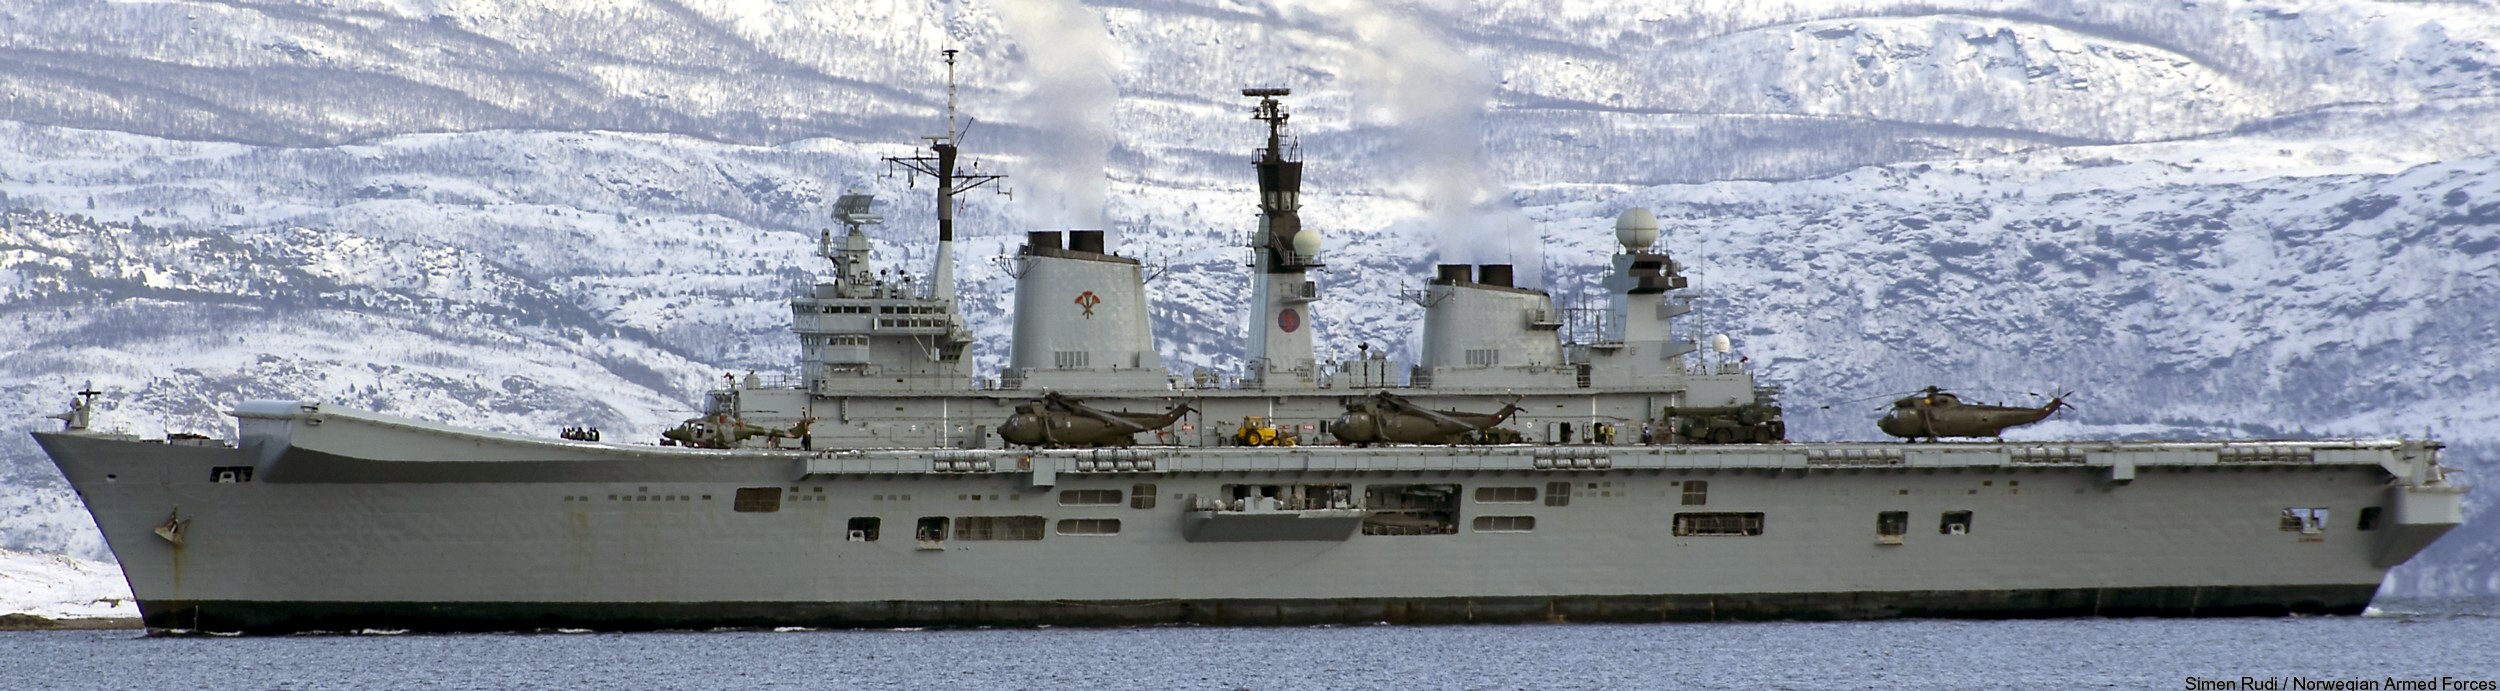 r-06 hms illustrious r06 invincible class aircraft carrier stovl royal navy 63 nato exercise